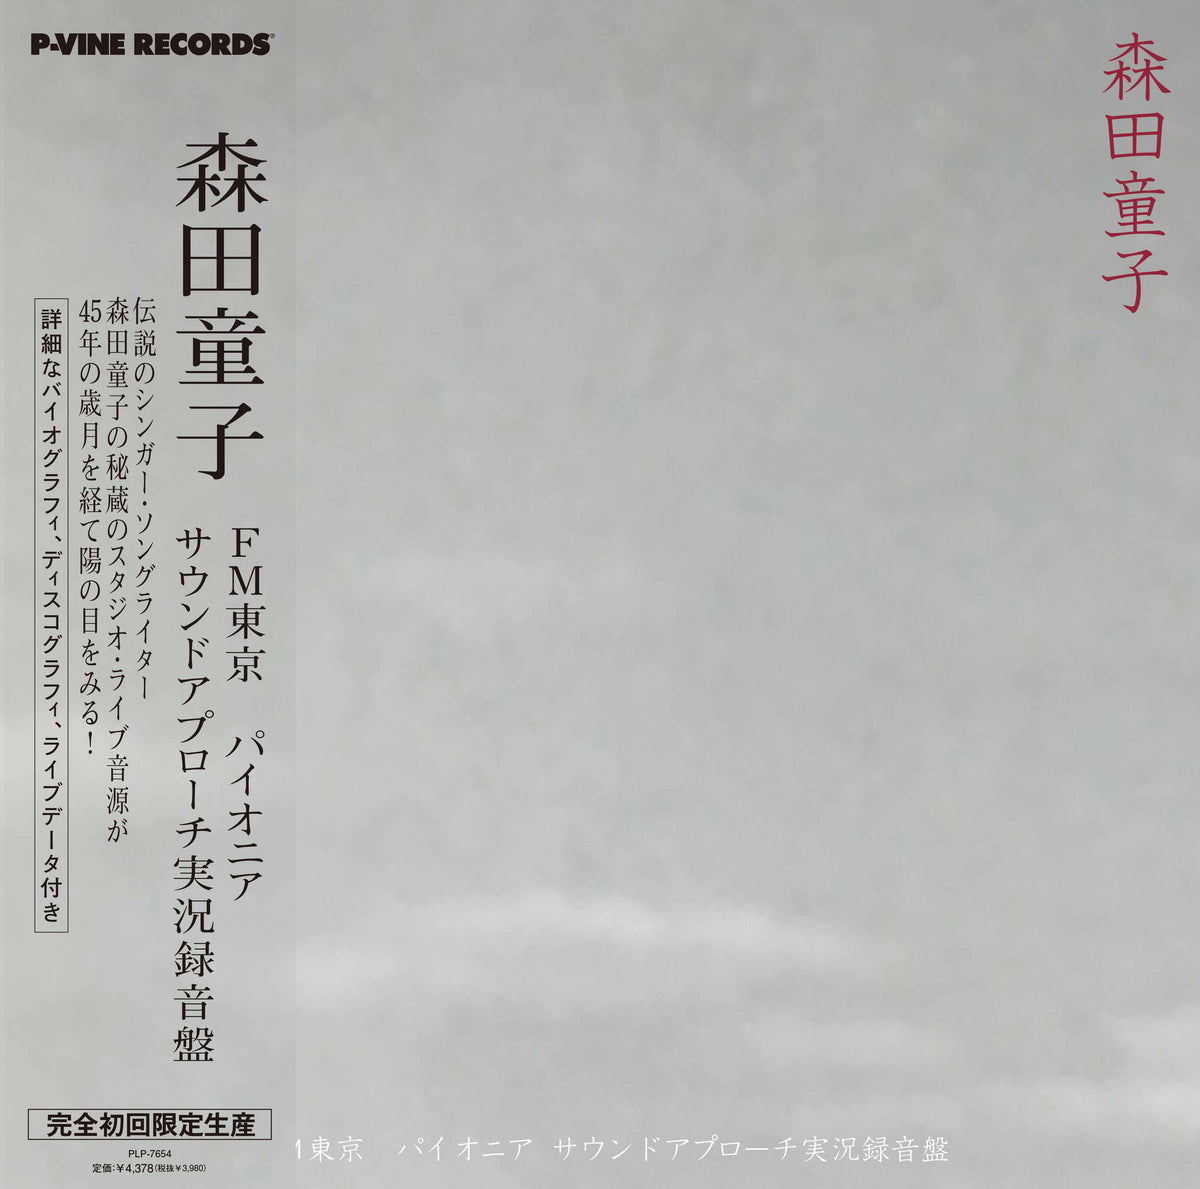 MORITA DOJI『FM Tokyo Pioneer Sound Approach』LP – P-VINE OFFICIAL 